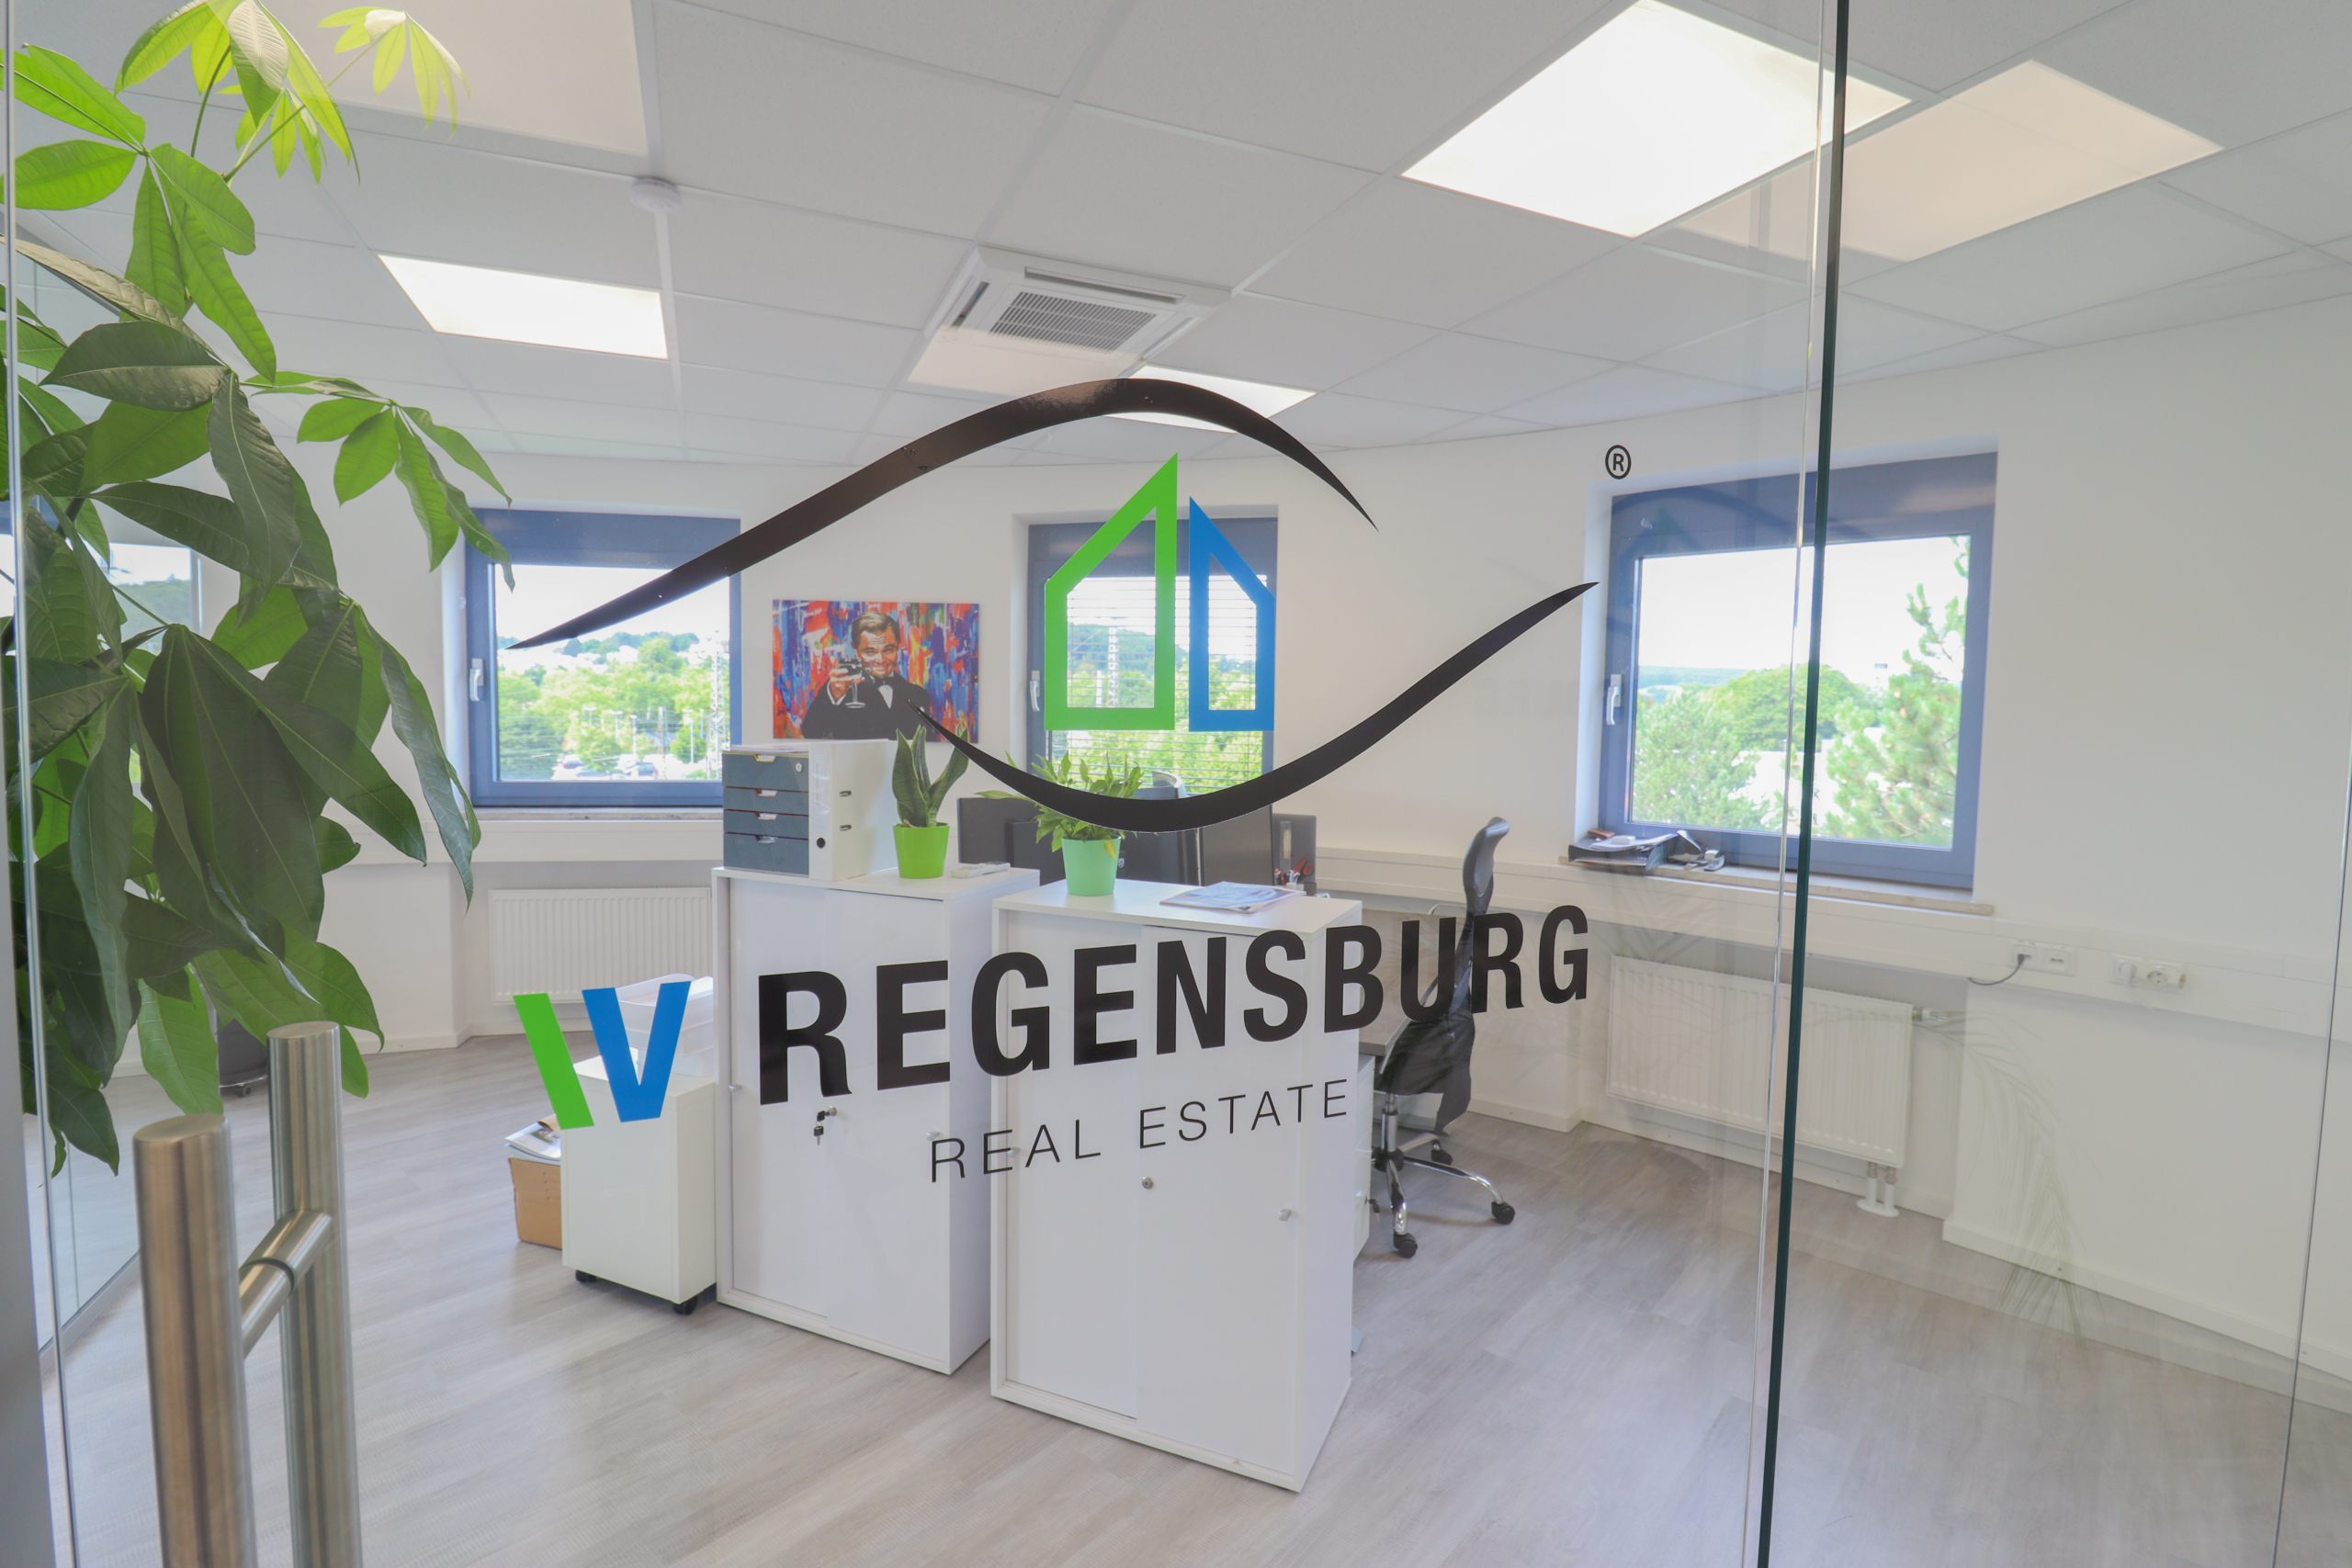 Büro IV Real Estate, Immobilien Finanzierung, Immobilienvermittlung, Immobilie kaufen, Immobilie verkaufen IV Regensburg